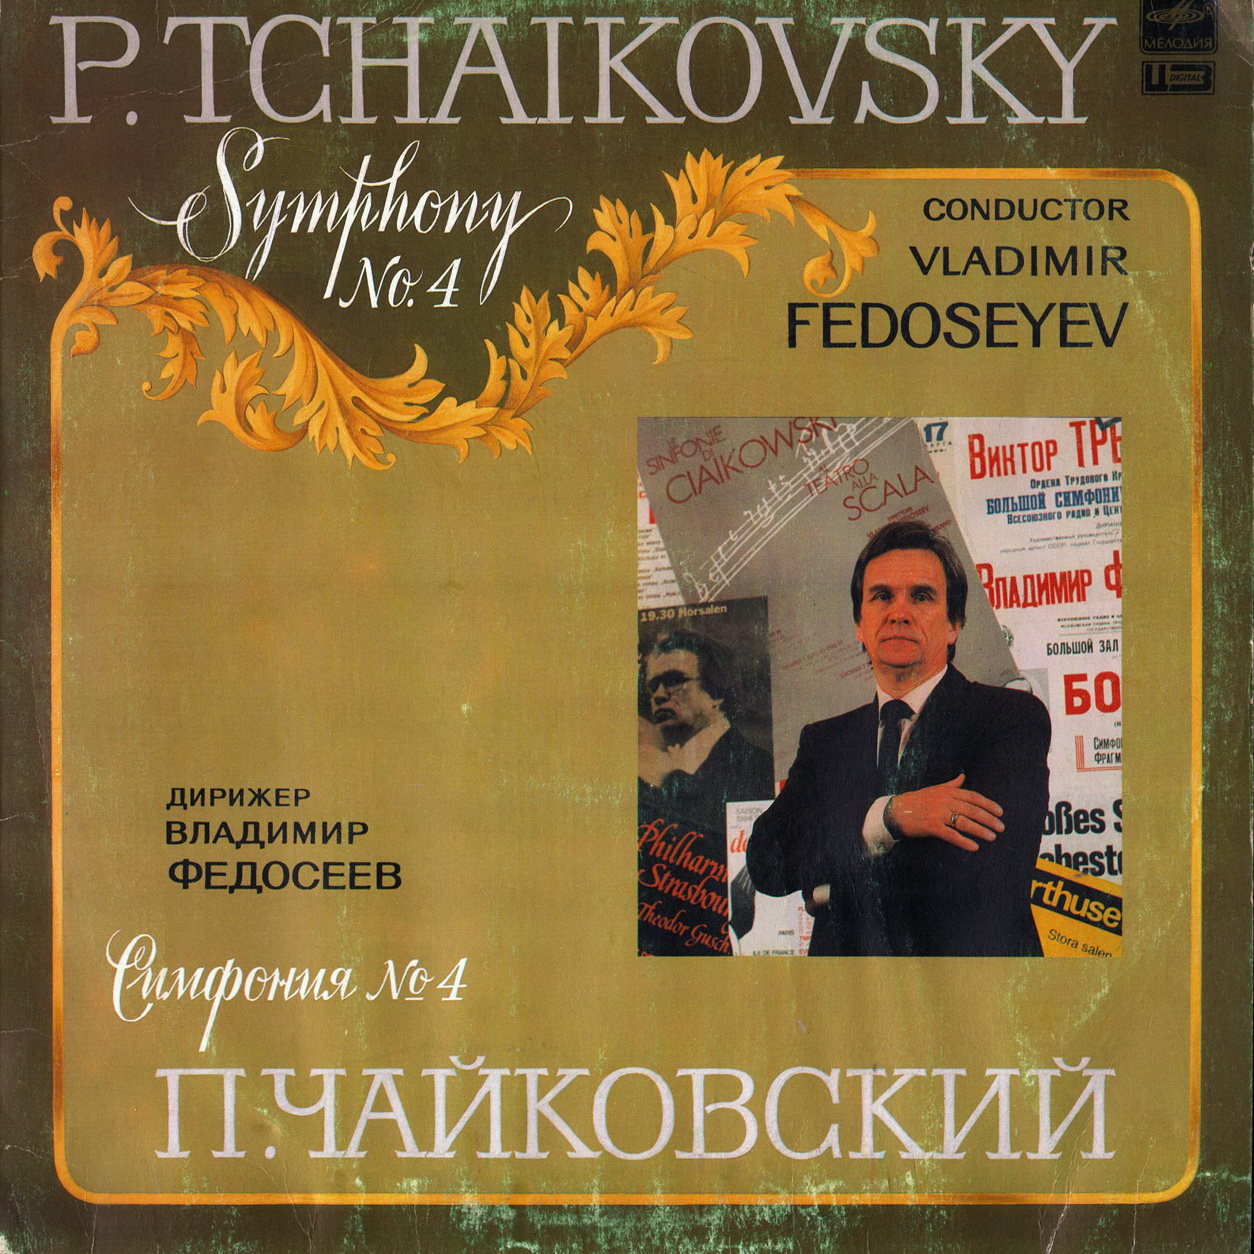 П. ЧАЙКОВСКИЙ (1840-1893): Симфония № 4 фа минор, соч. 36 (В. Федосеев)